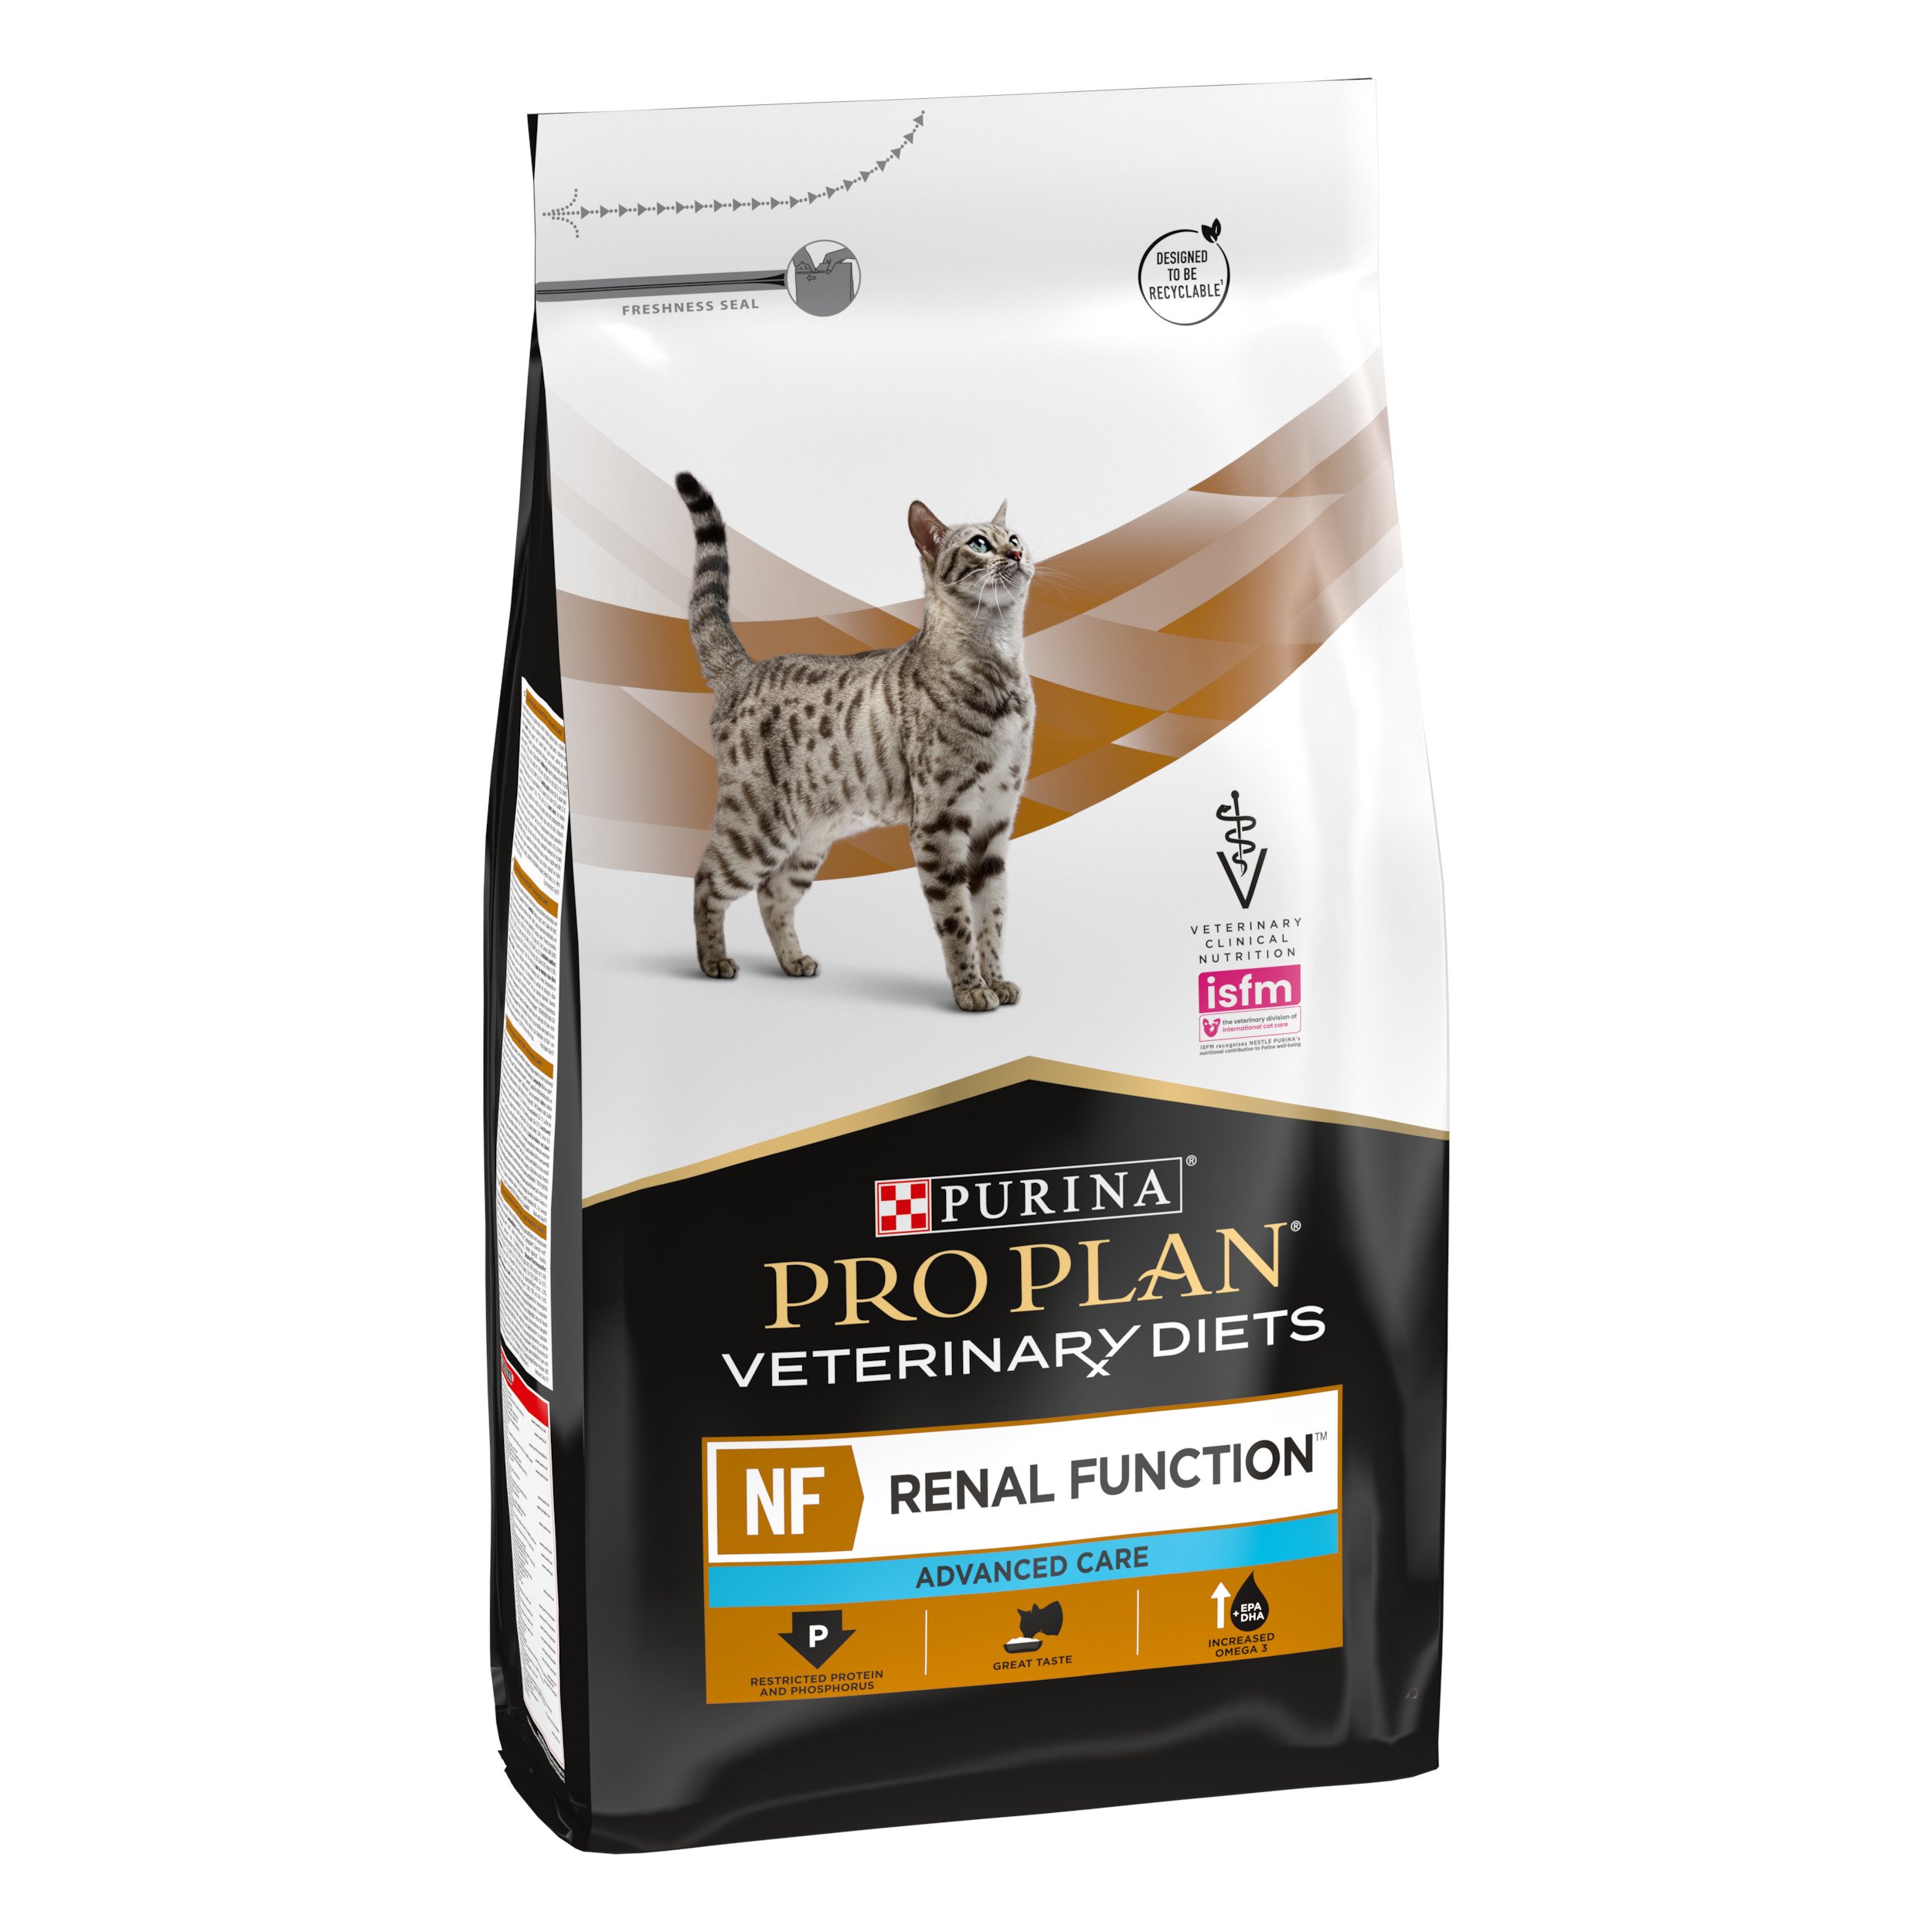 Сухой корм для котов при заболеваниях почек Purina Pro Plan Veterinary Diets NF Renal Function, 5 кг - фото 3